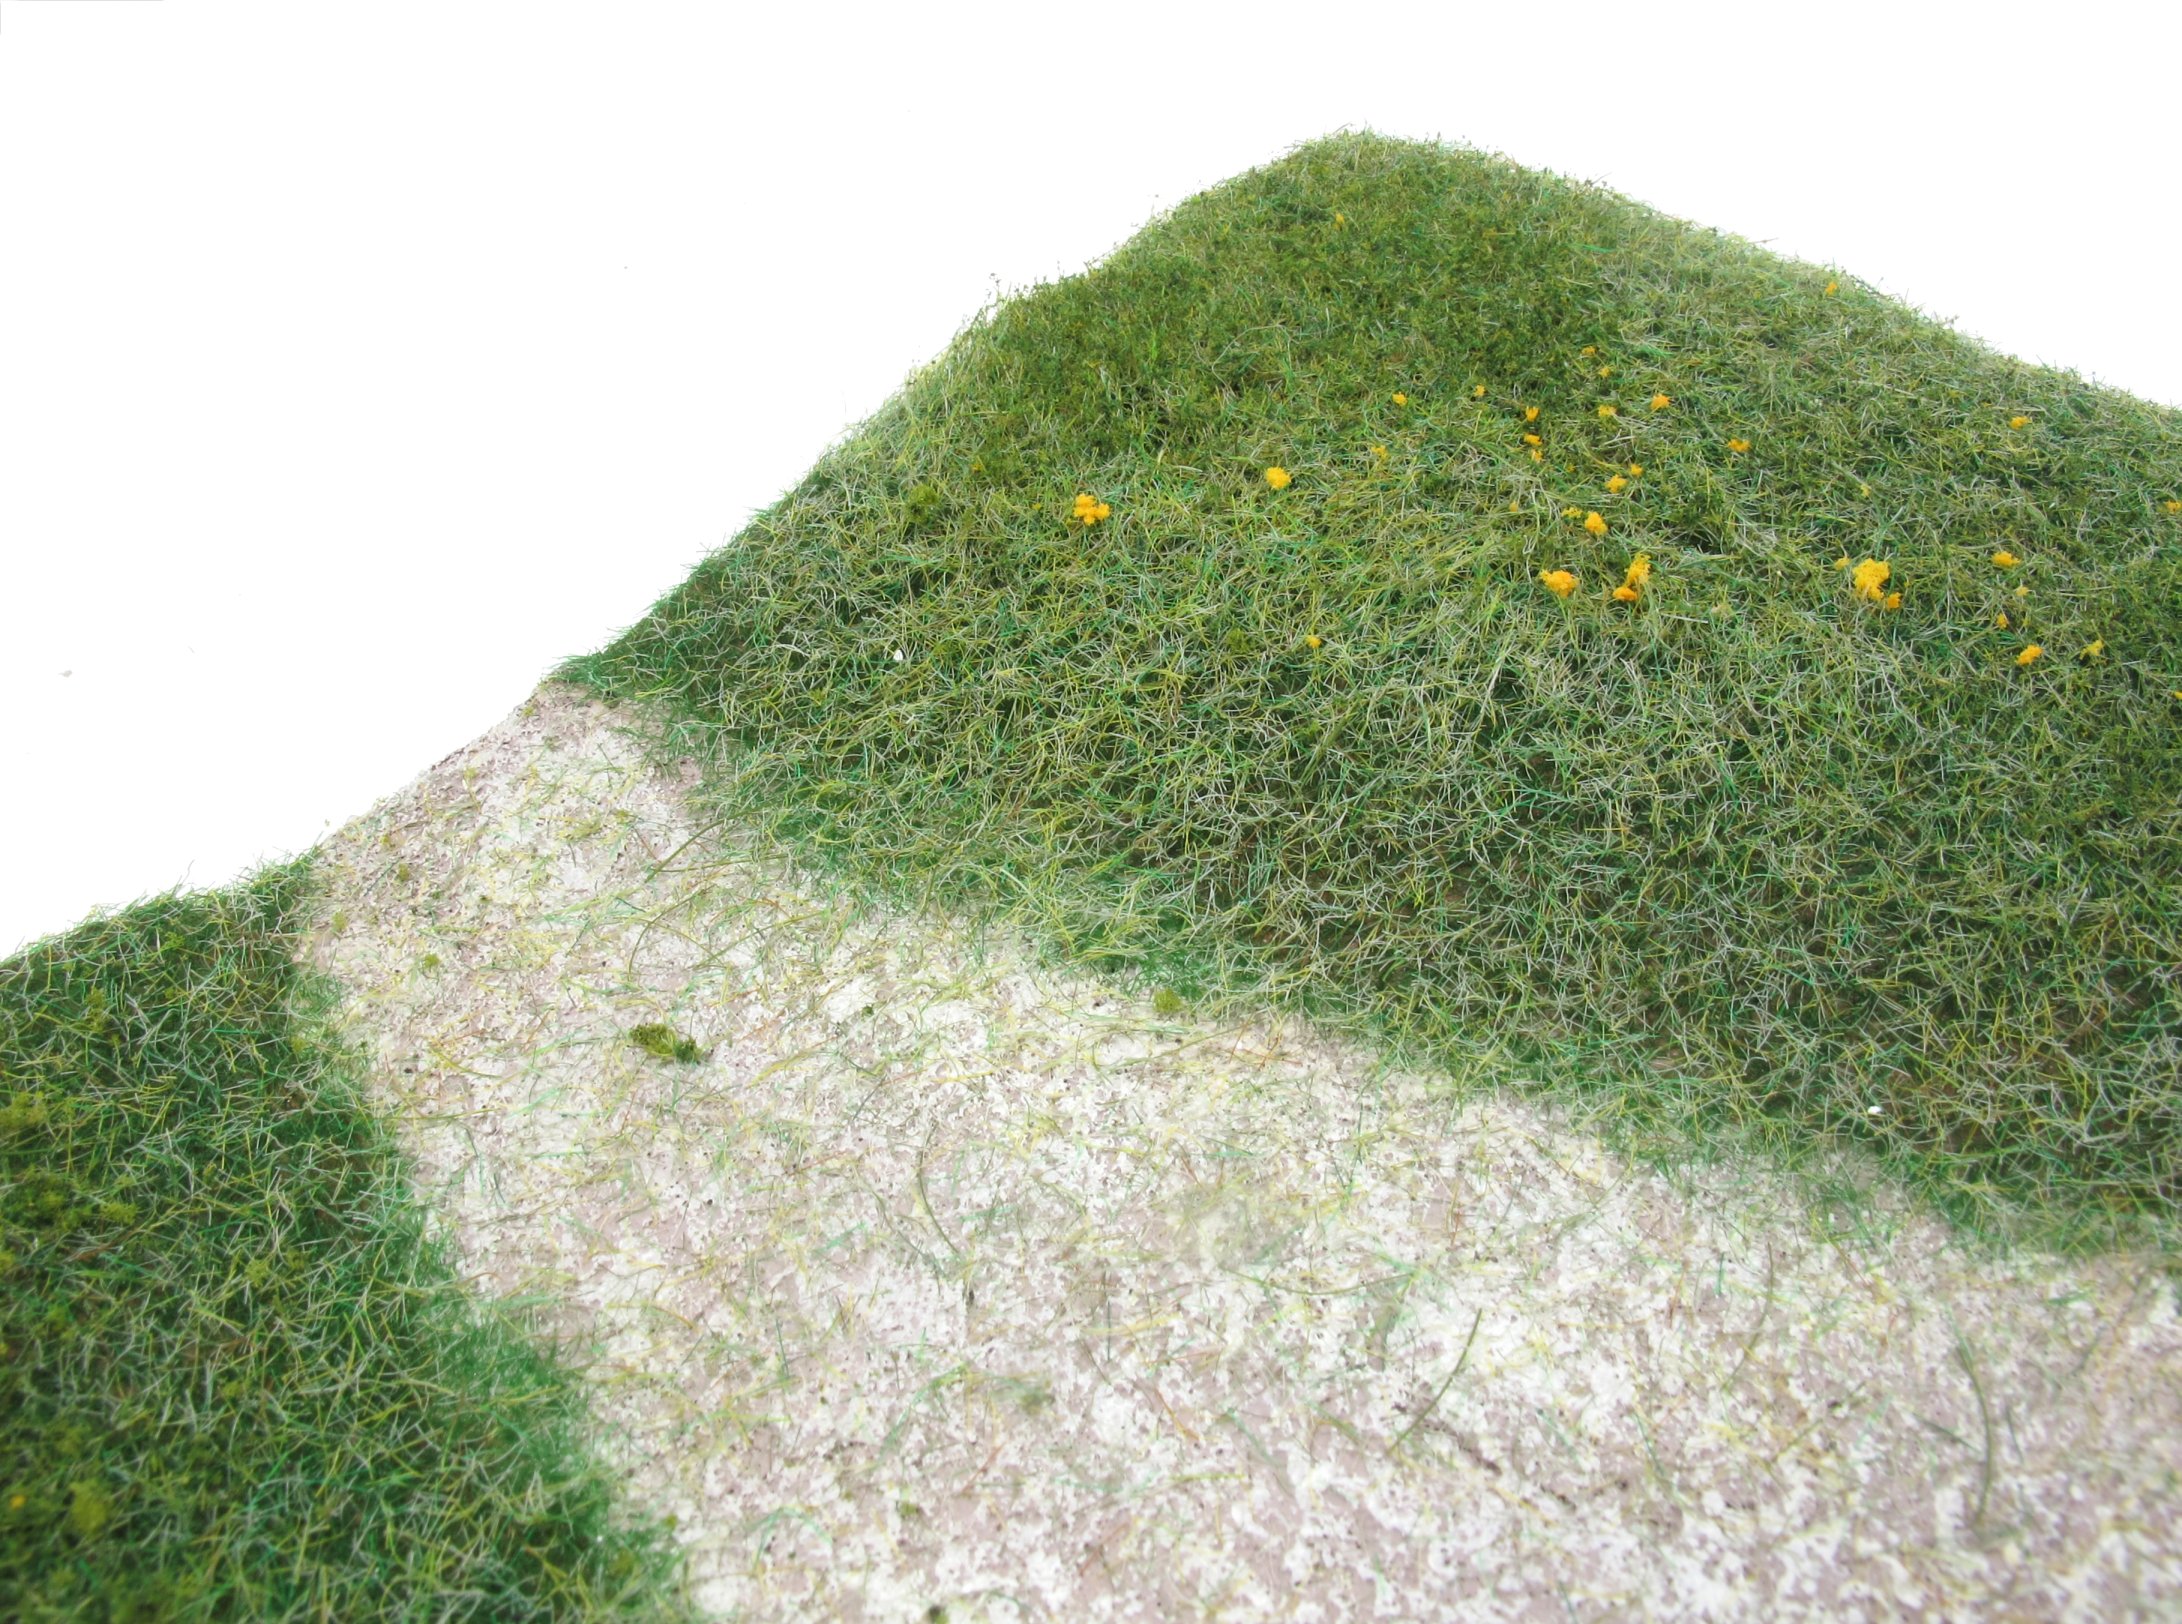 Model grass